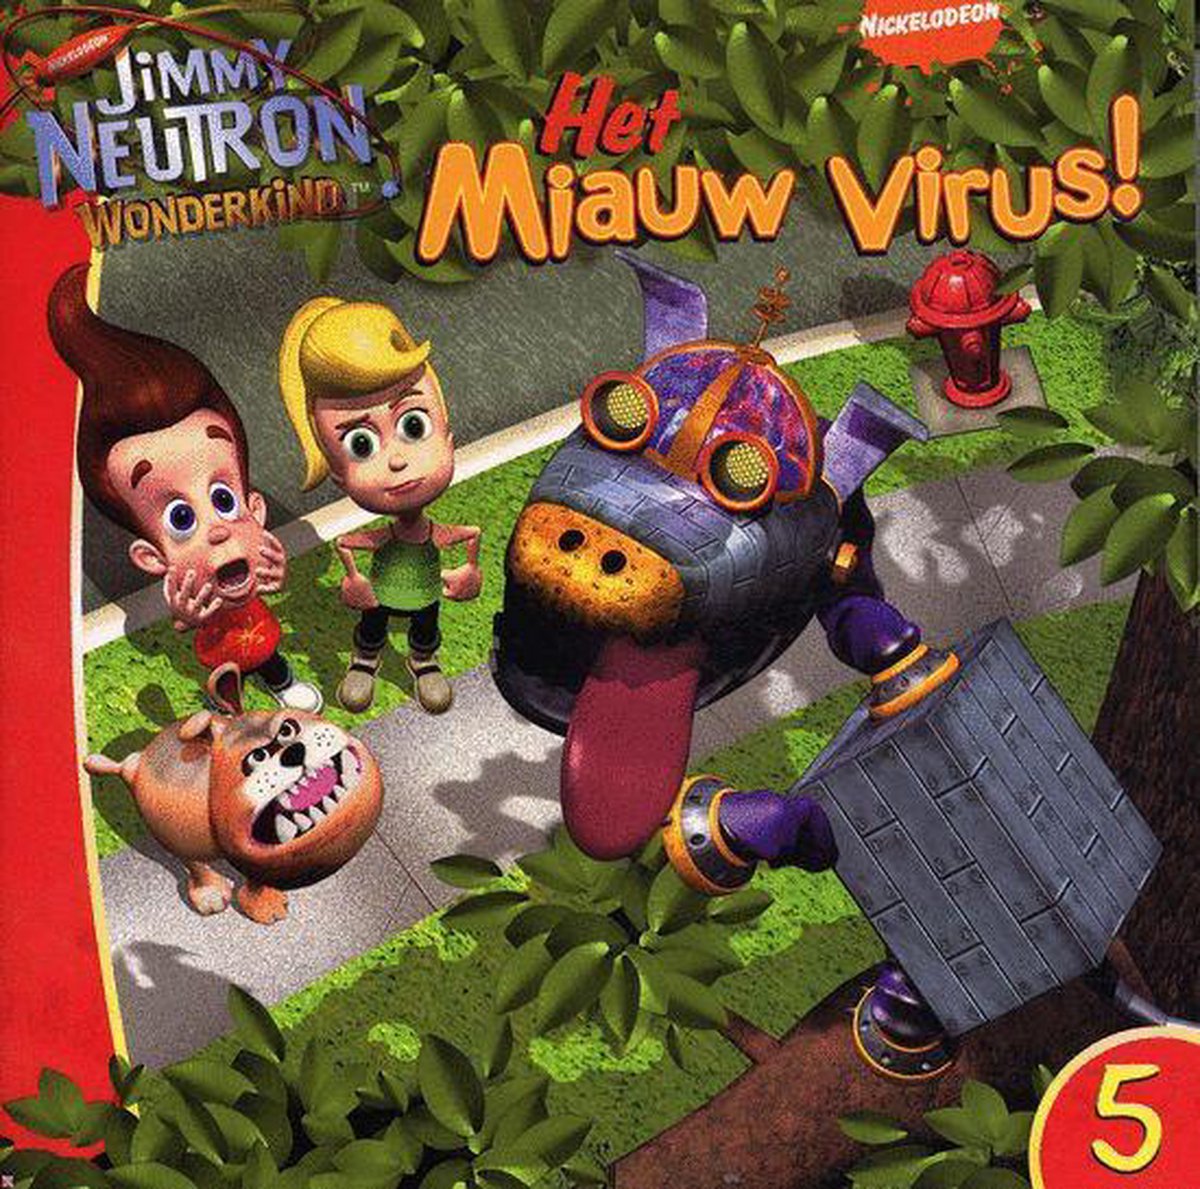 Het miauw virus! / Nickelodeon Jimmy Neutron wonderkind / 5